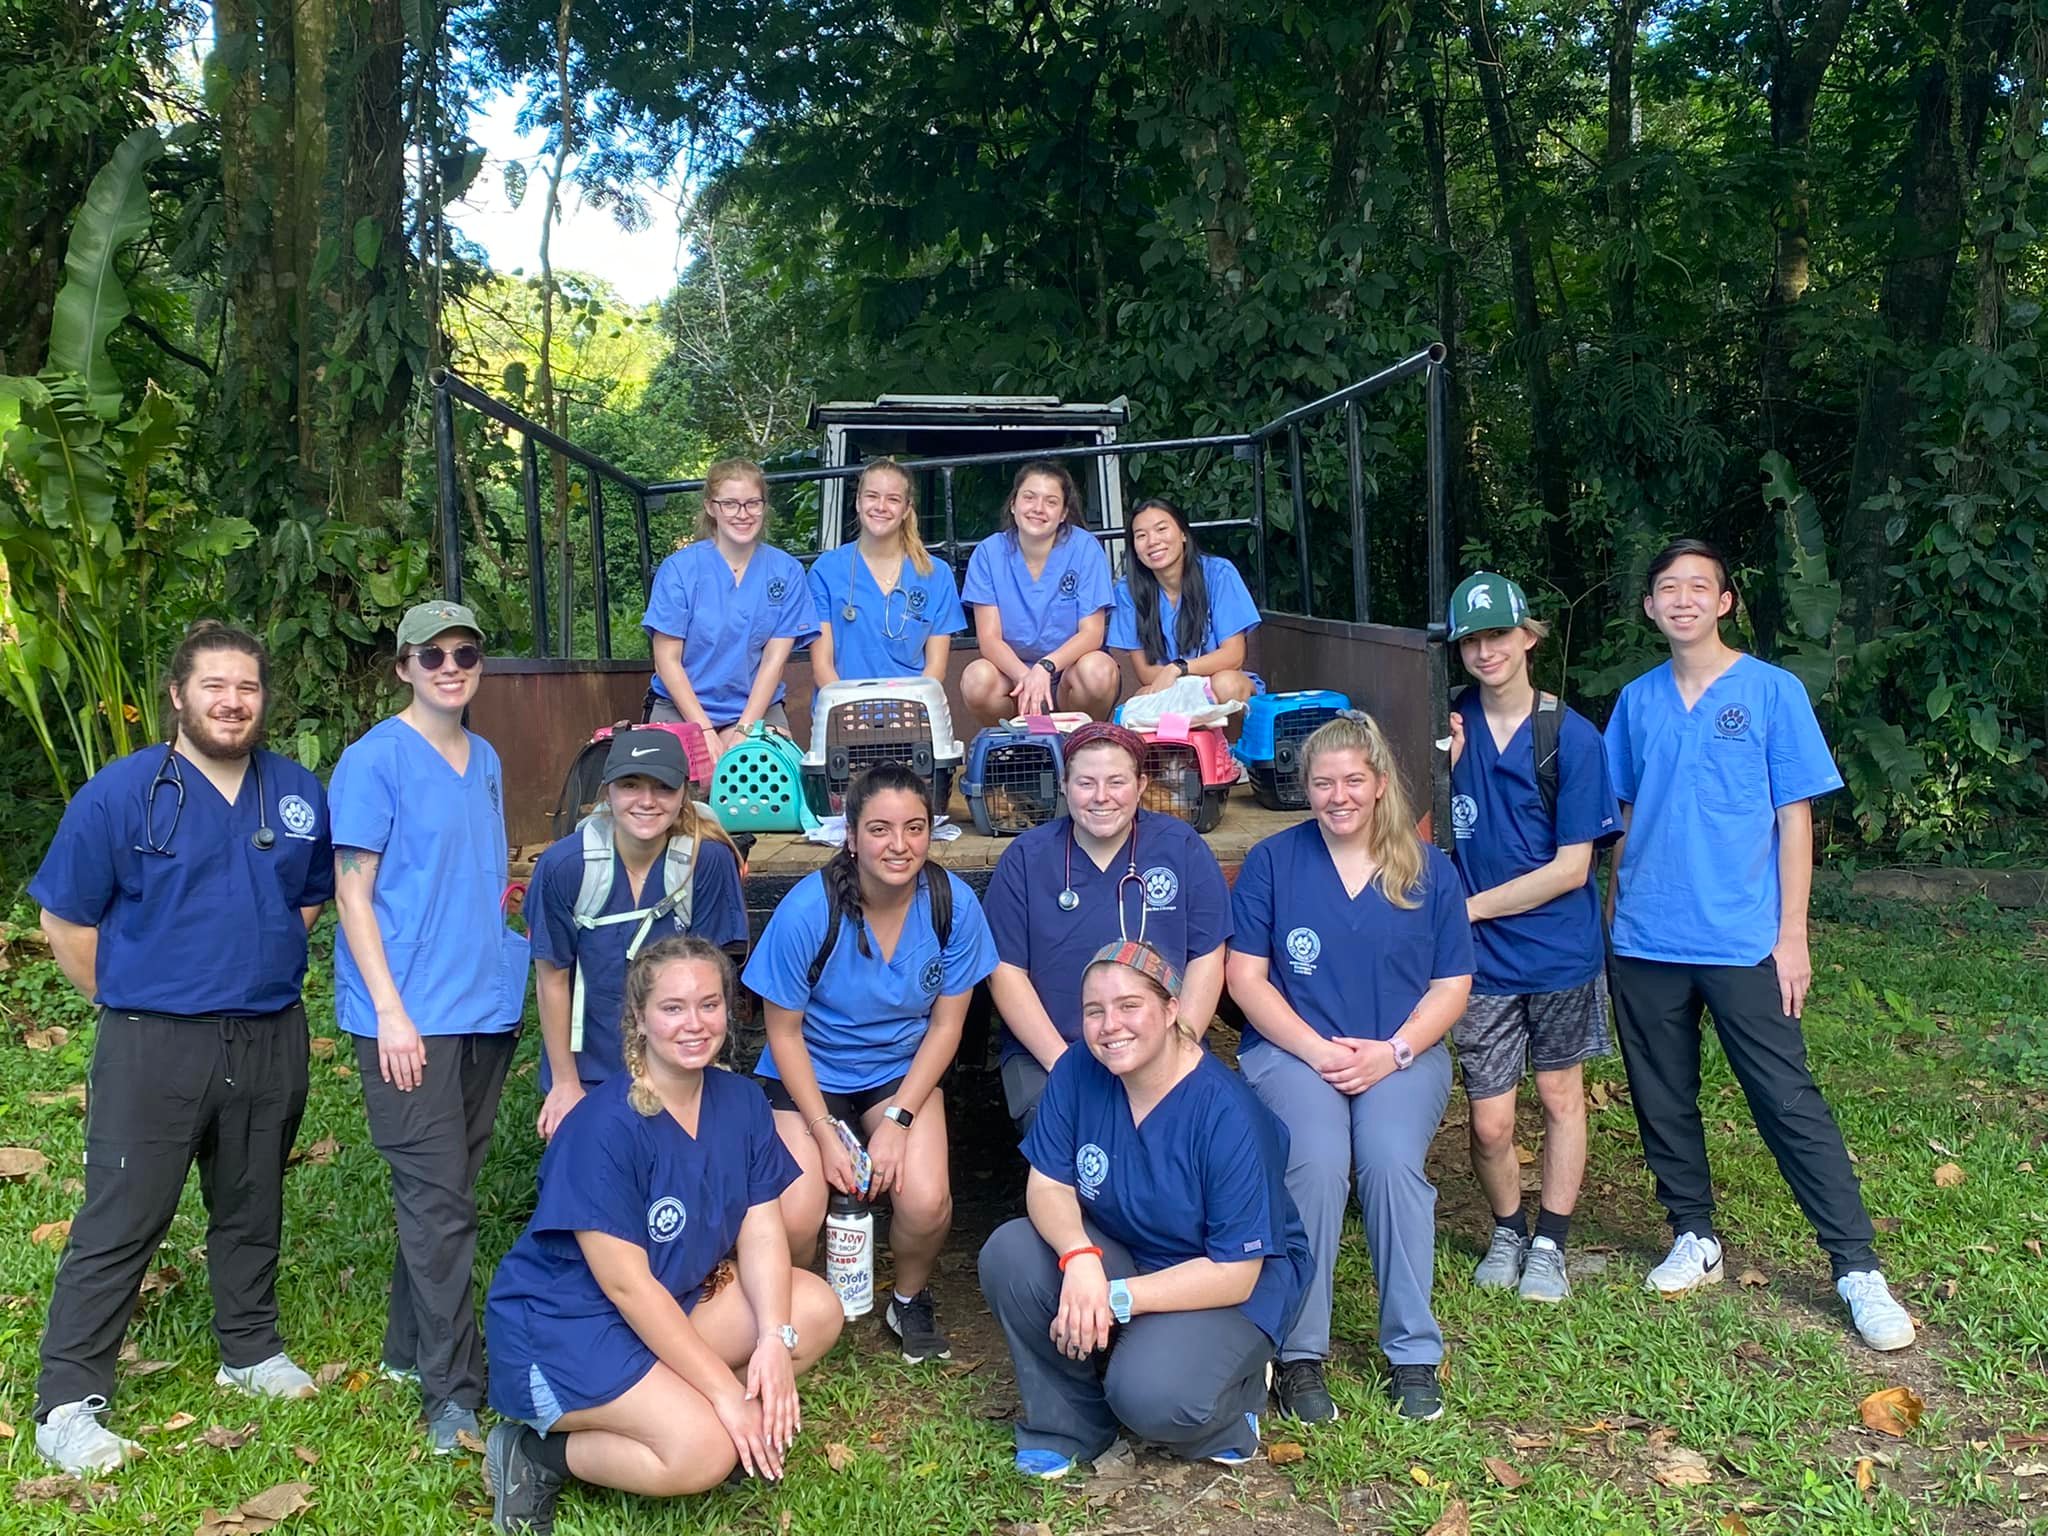 LMU-CVM students group photo In Costa Rica